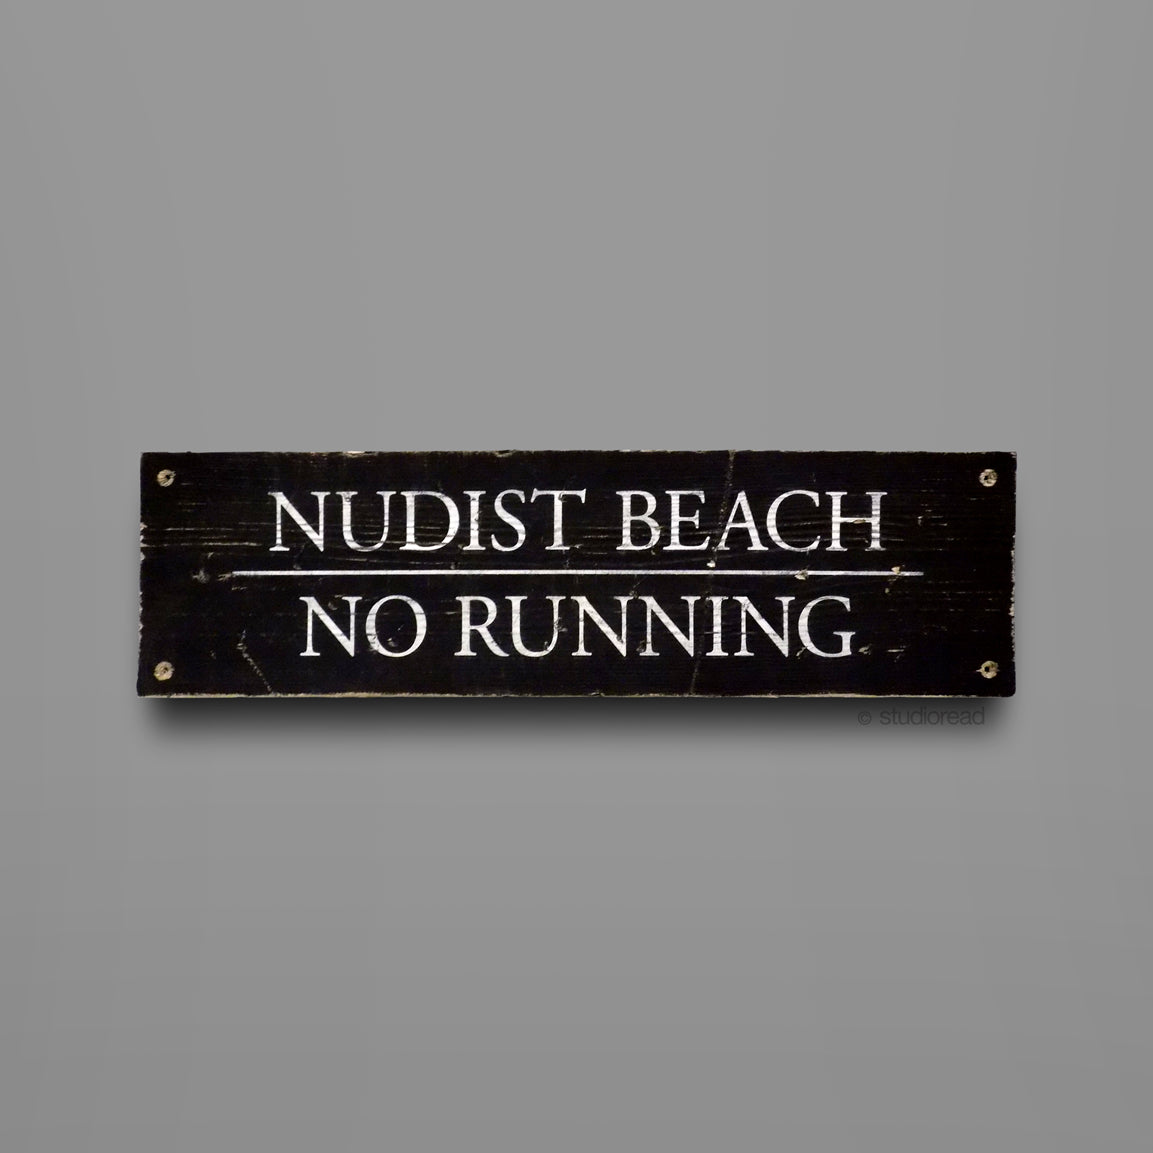 Nudist Beach - Sign